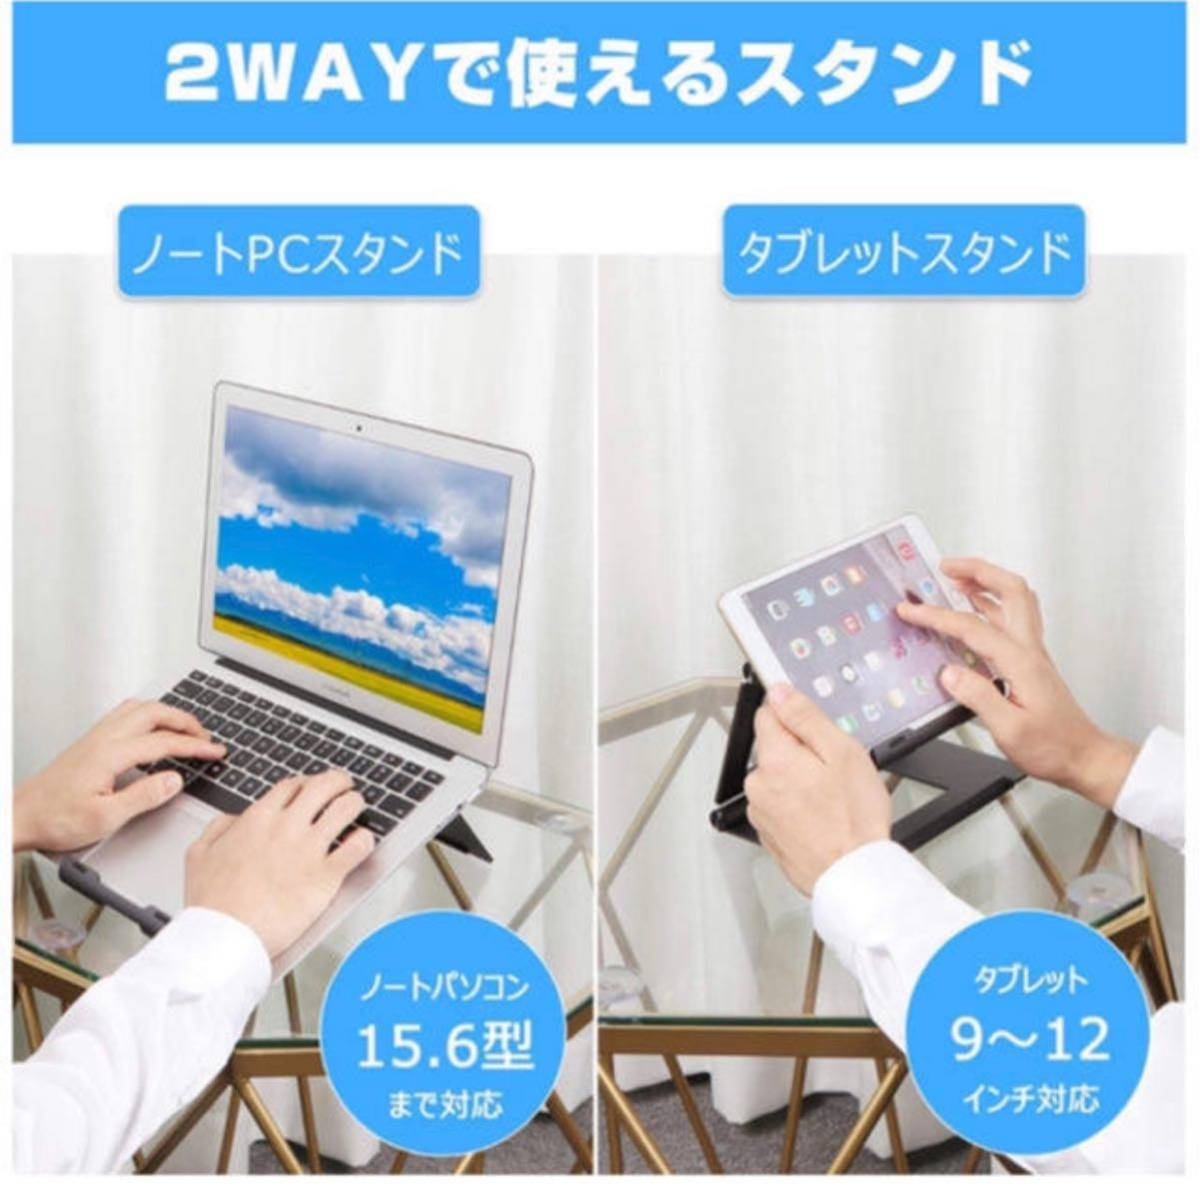 Seavish folding type laptop stand 2Way stand 